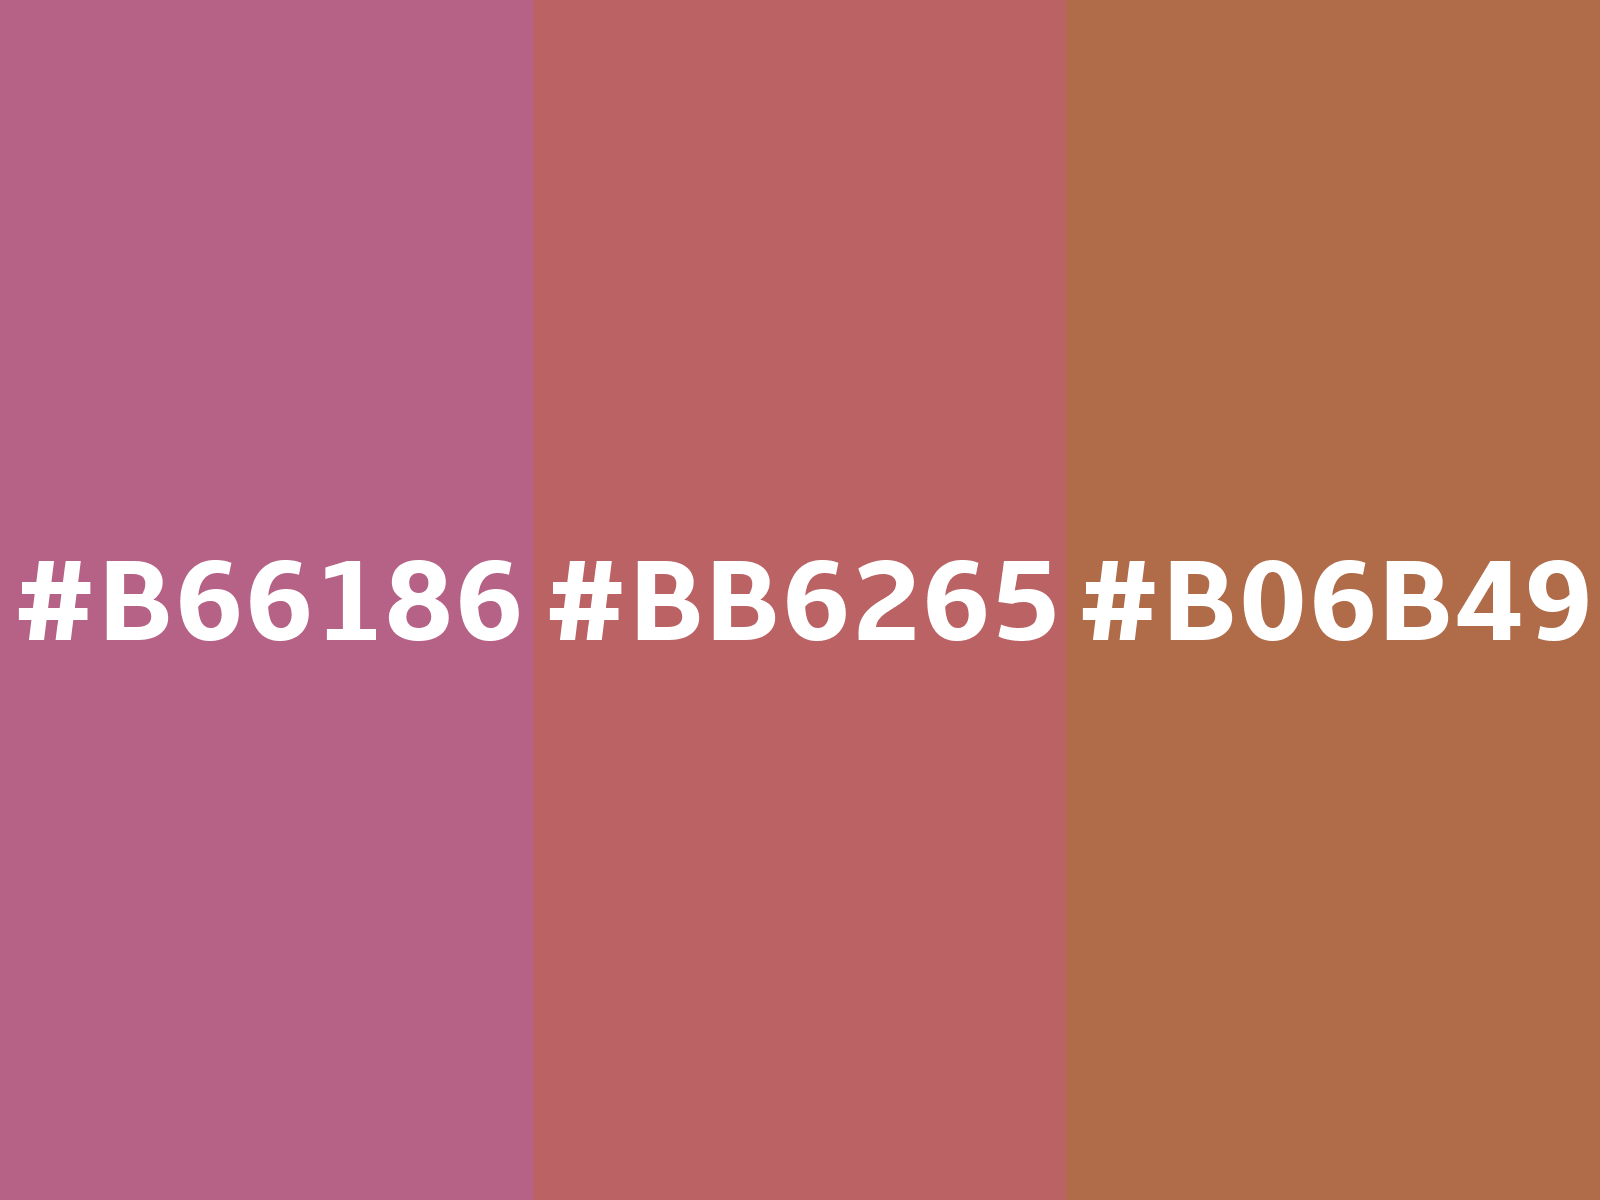 bb6265